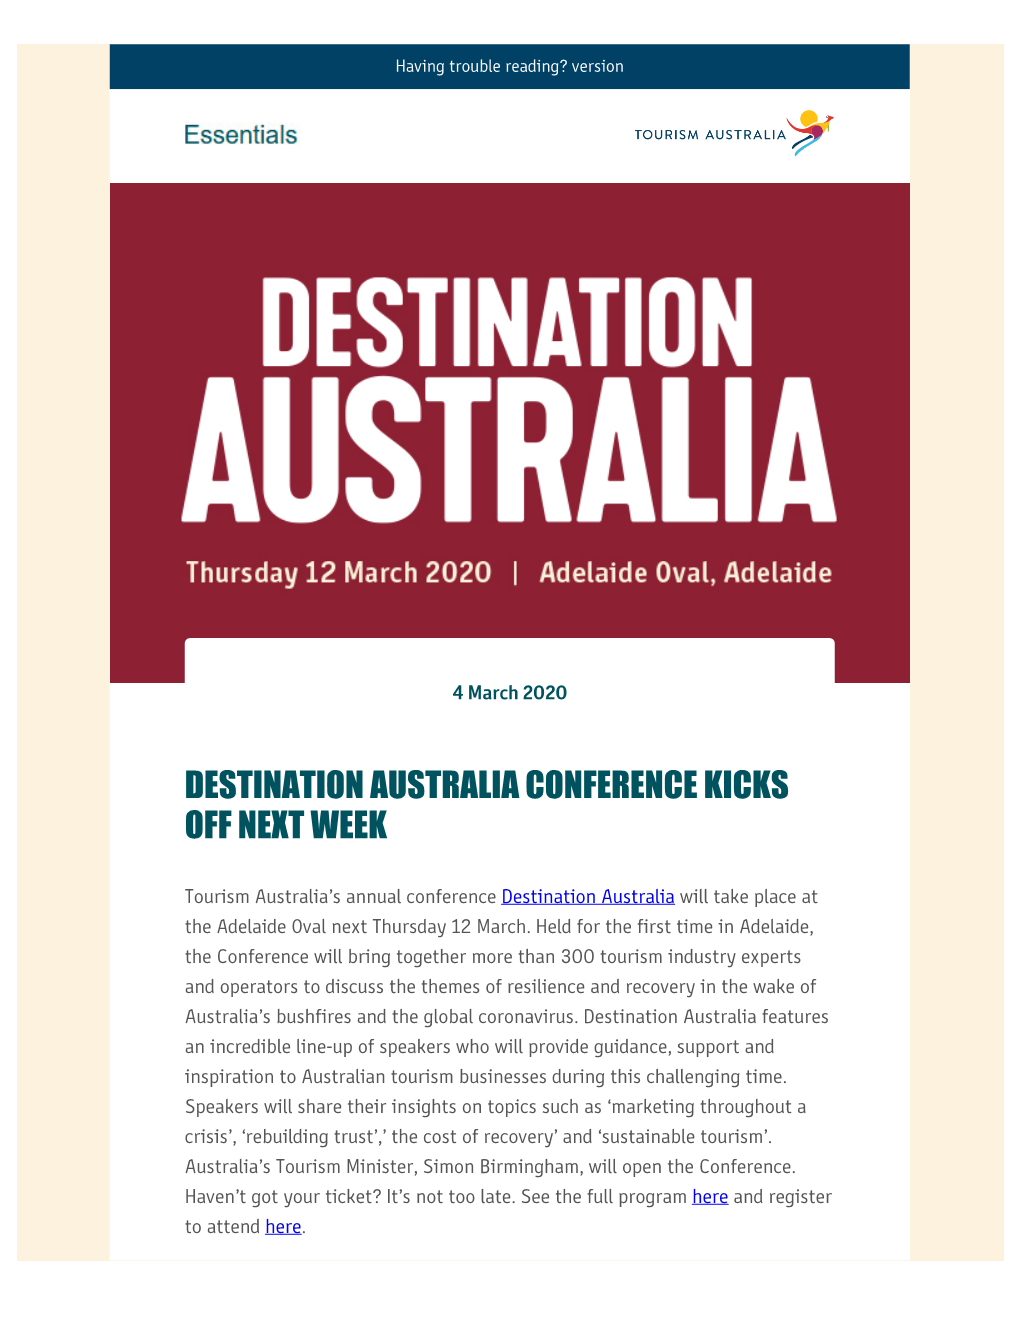 Destination Australia Conference Kicks Off Next Week